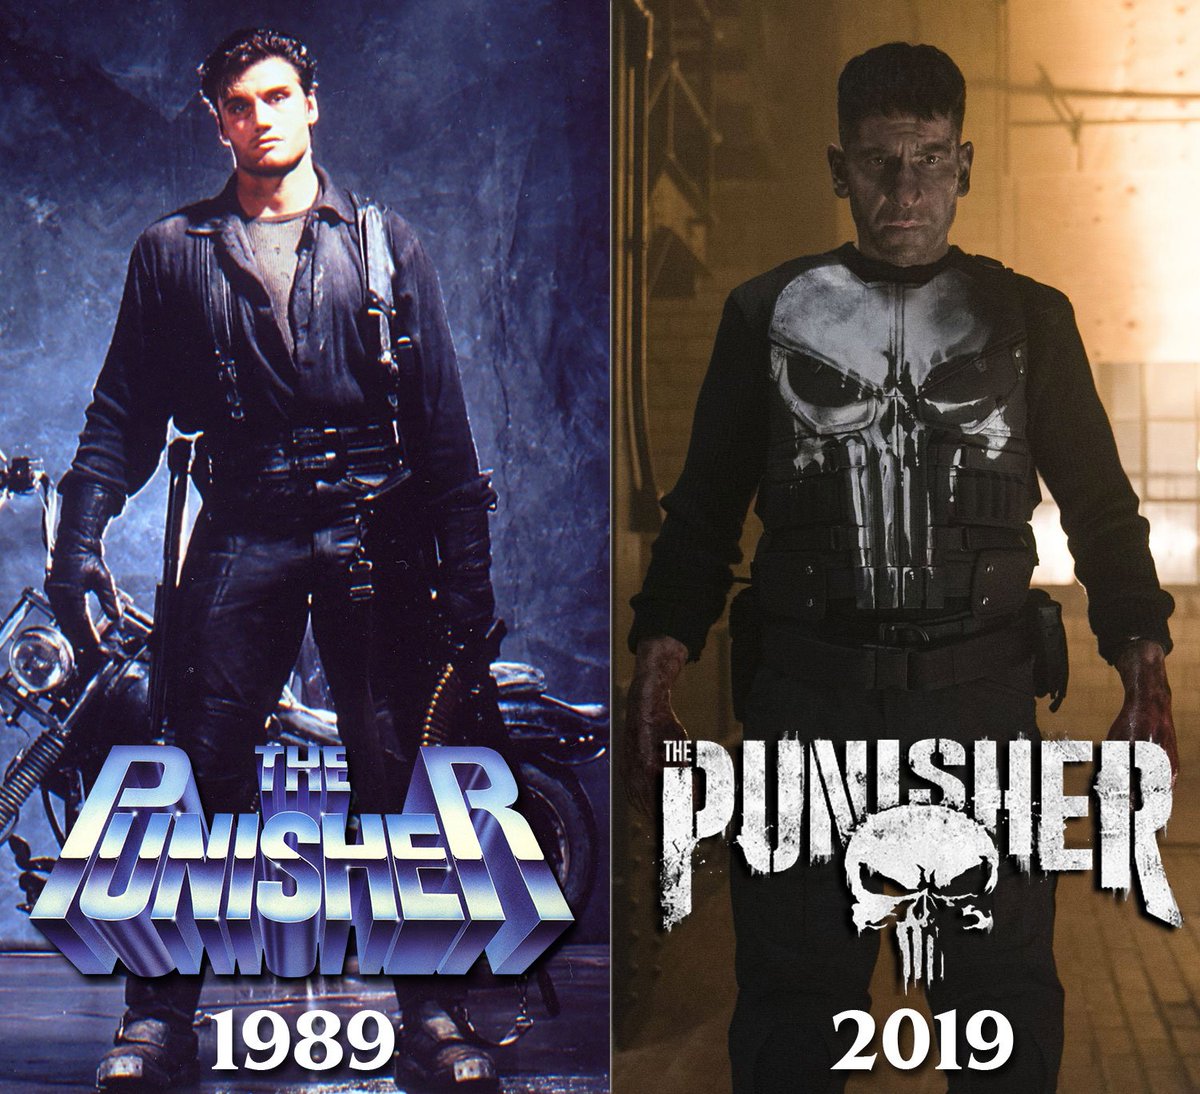 Punisher in film - Wikipedia